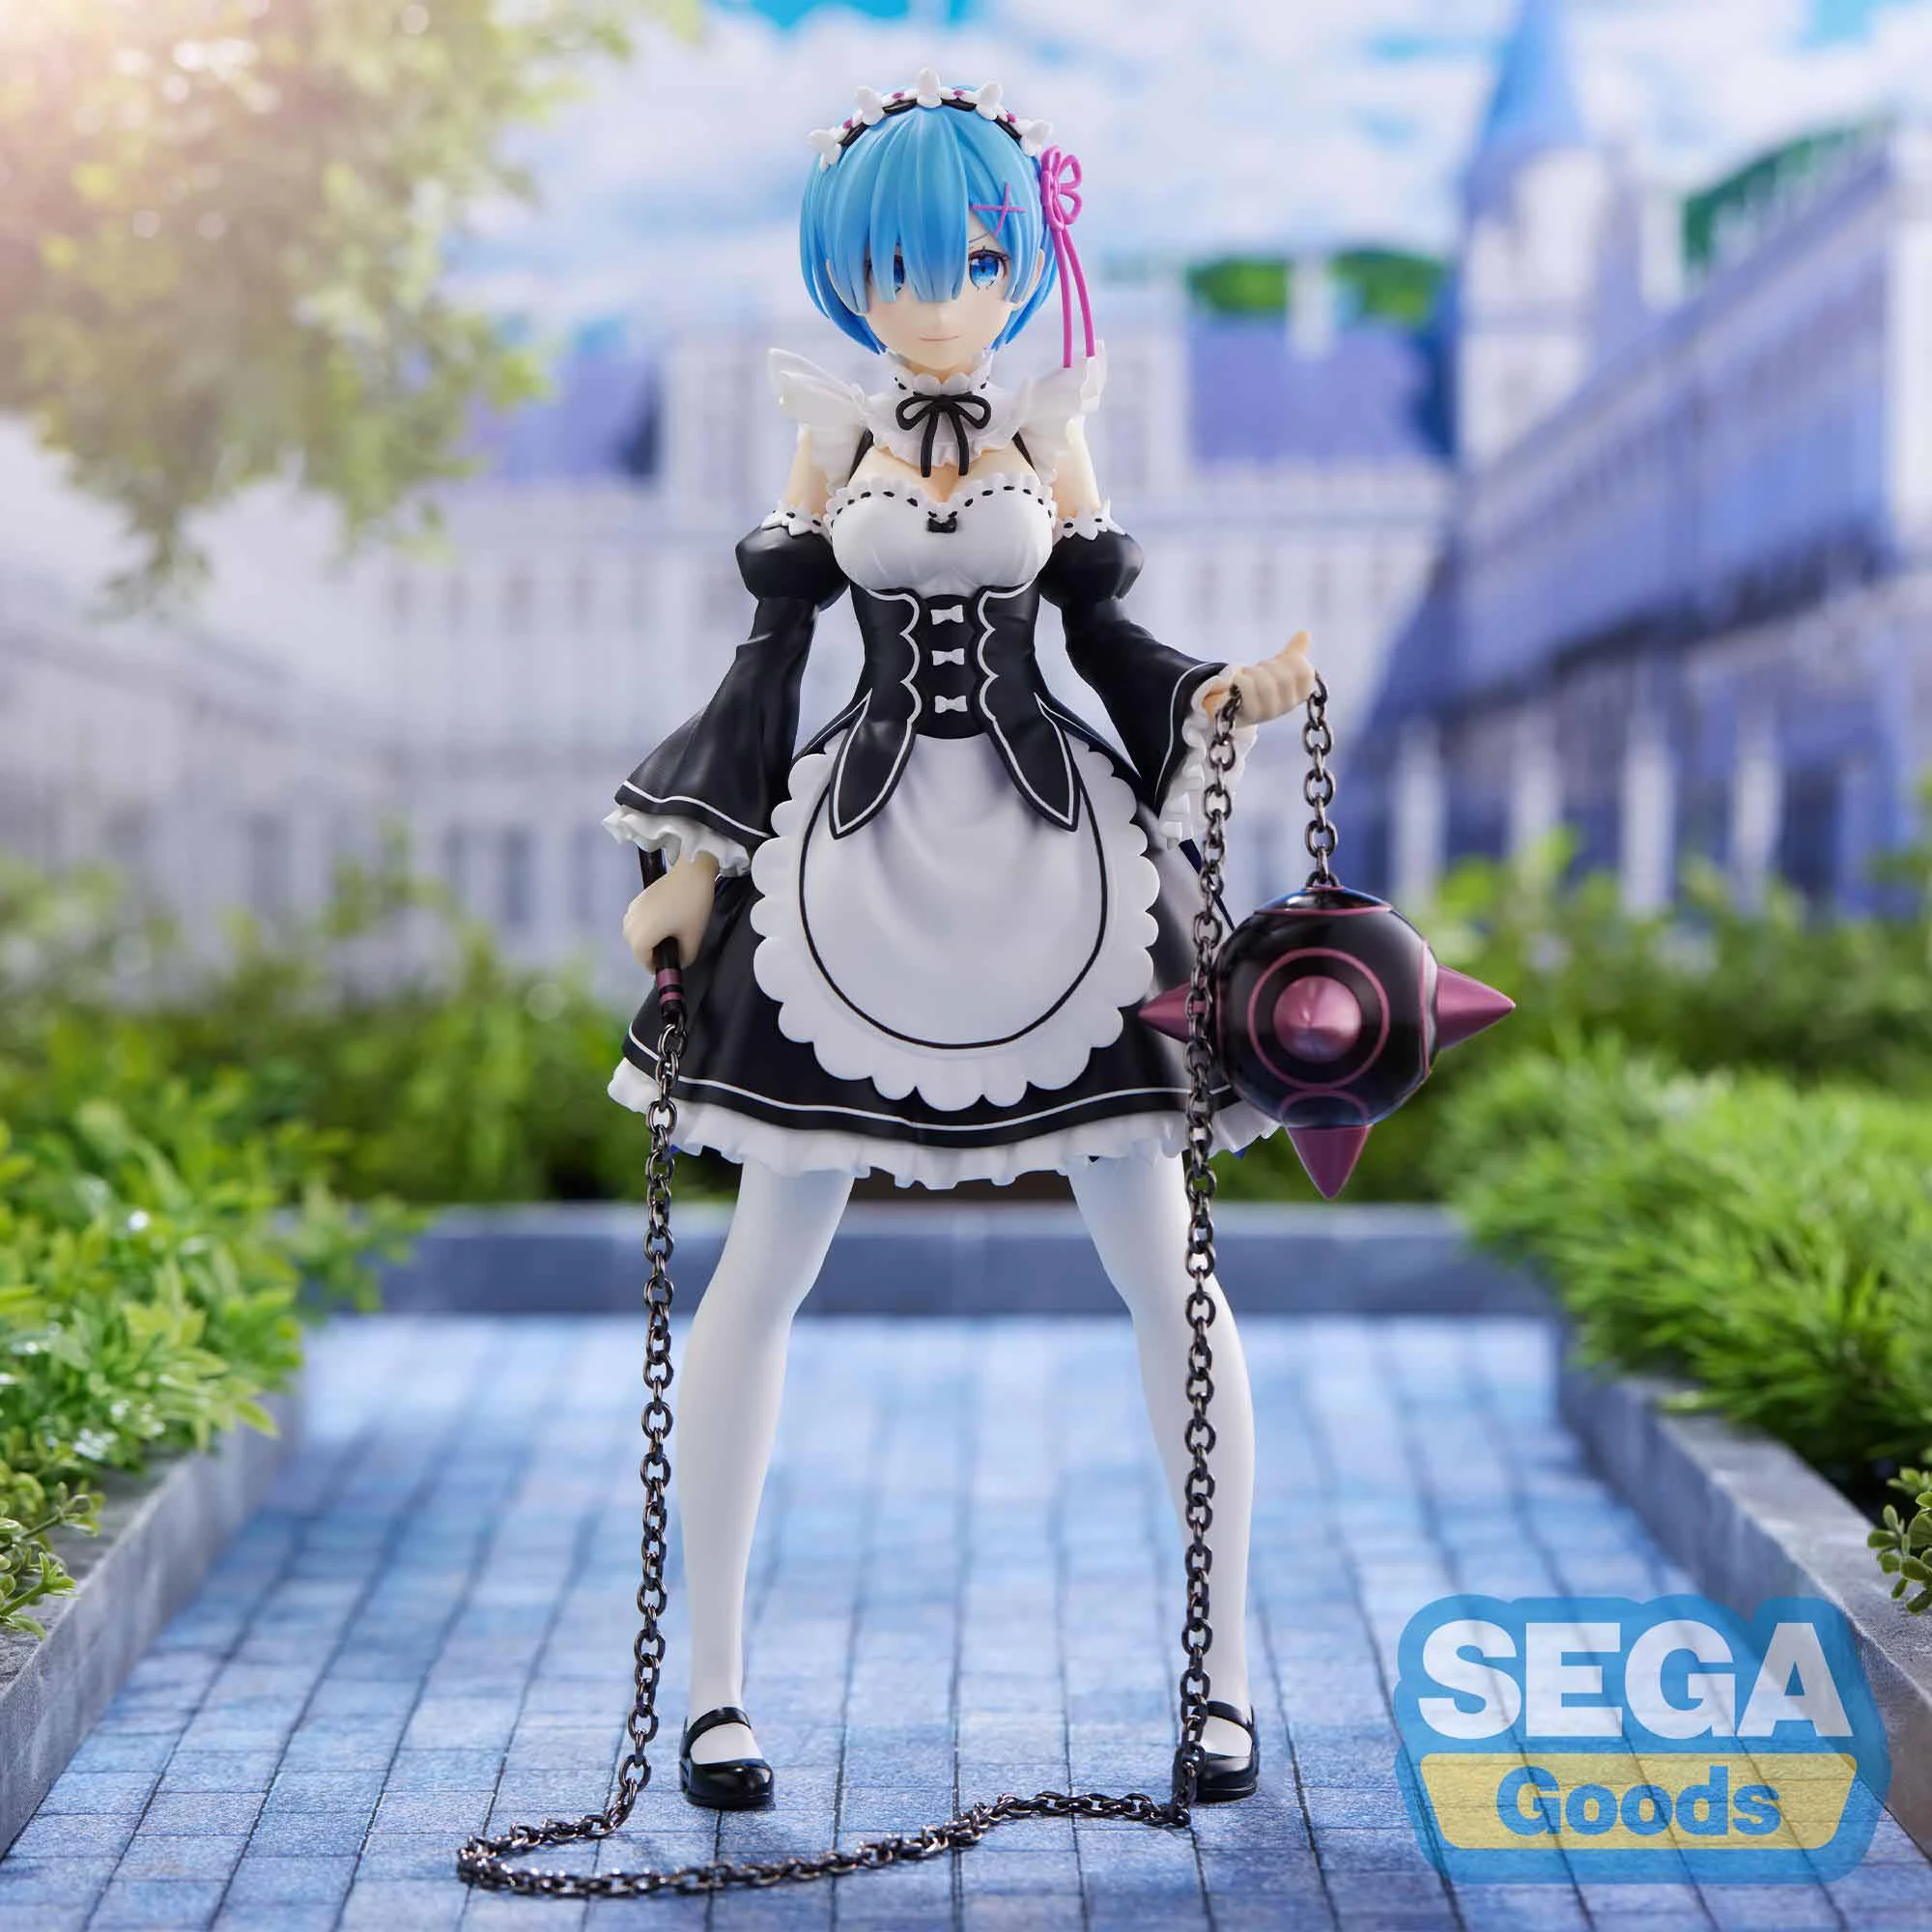 Action Toy Figures Ornaments | Remu Anime Figure Models | Rezero Figure  Sega - Stock - Aliexpress